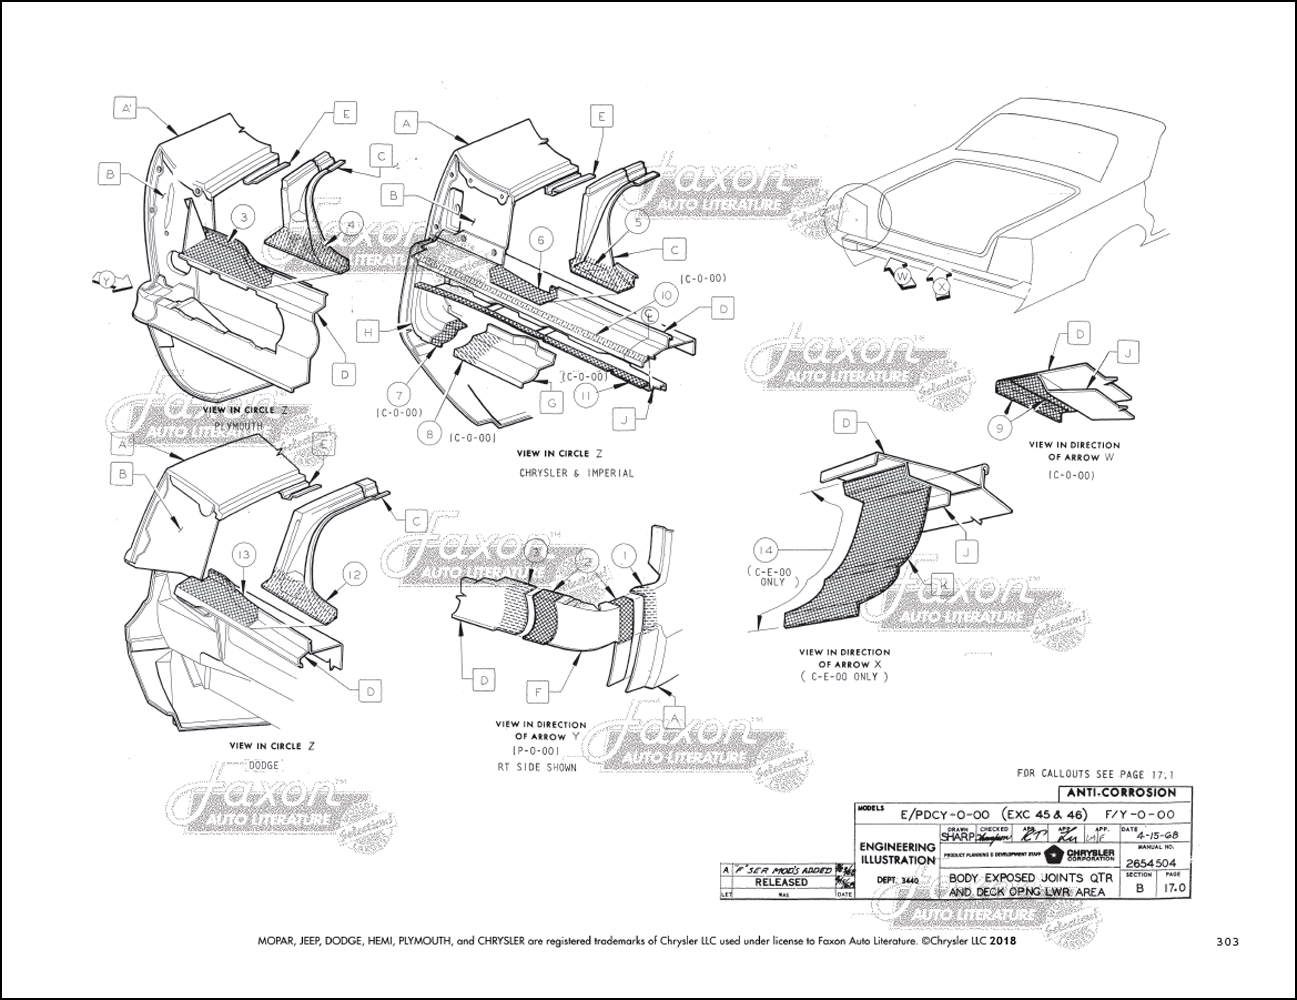 1969-1970 Chrysler, Plymouth, Dodge Big Car Body Assembly Manual Reprint